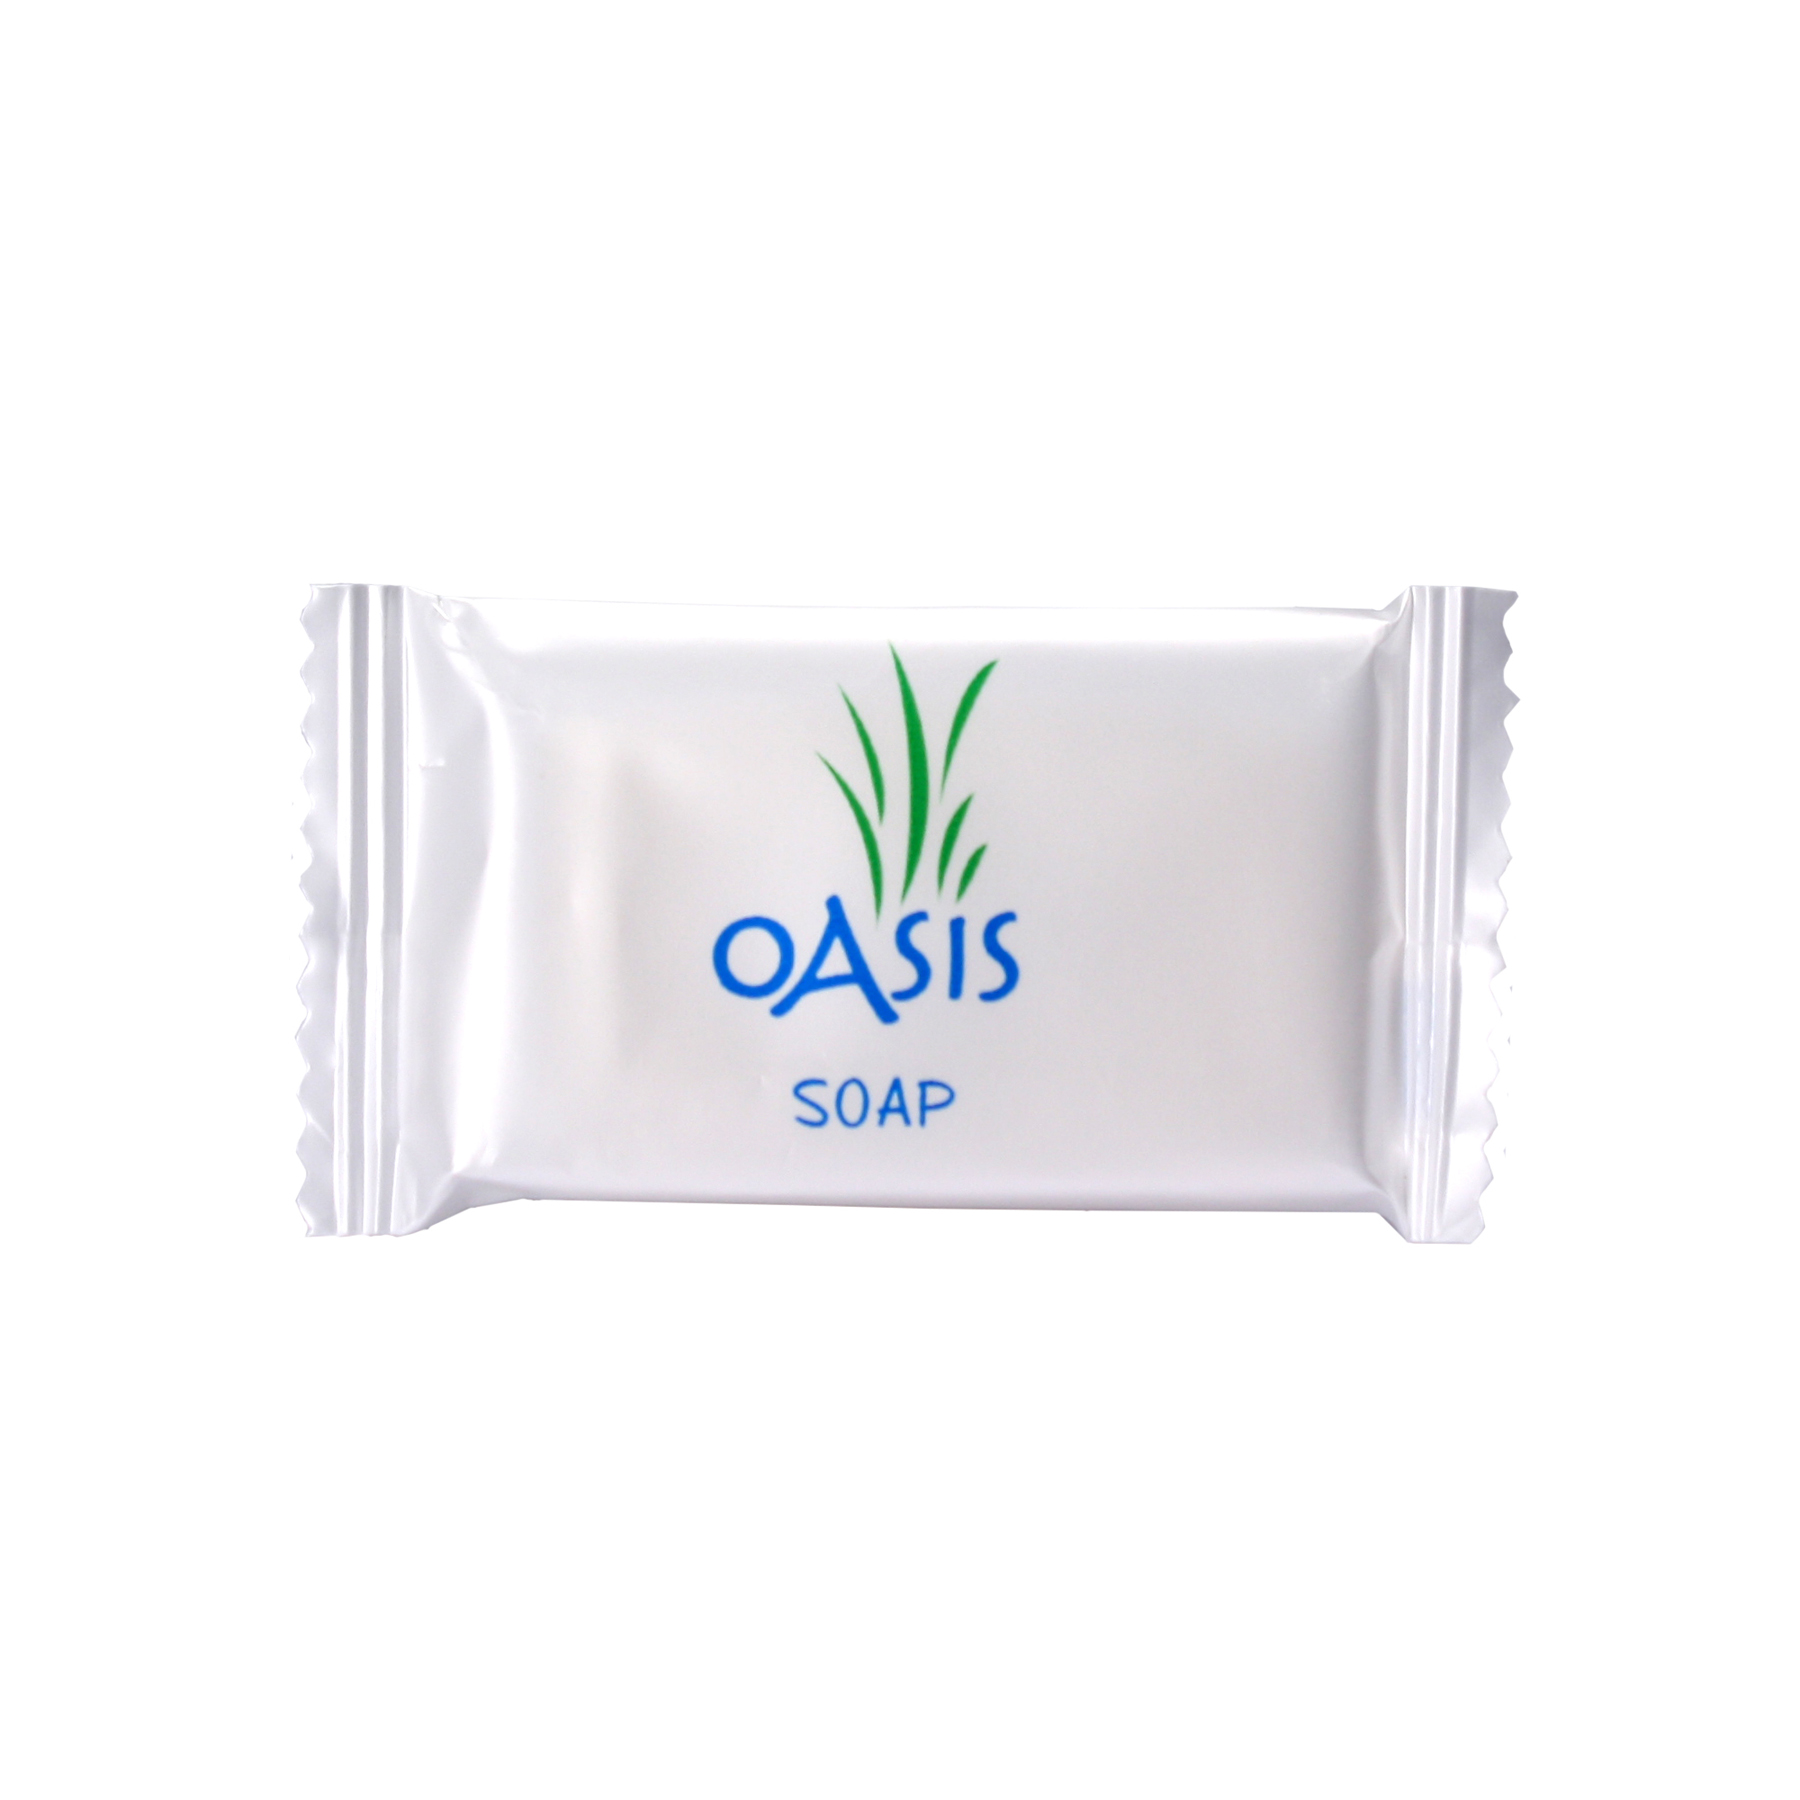 24 BARS SOAP BATH & FACE SOAP #1.5 OASIS HOUSEHOLD/HOTEL/TRAVEL SIZE 